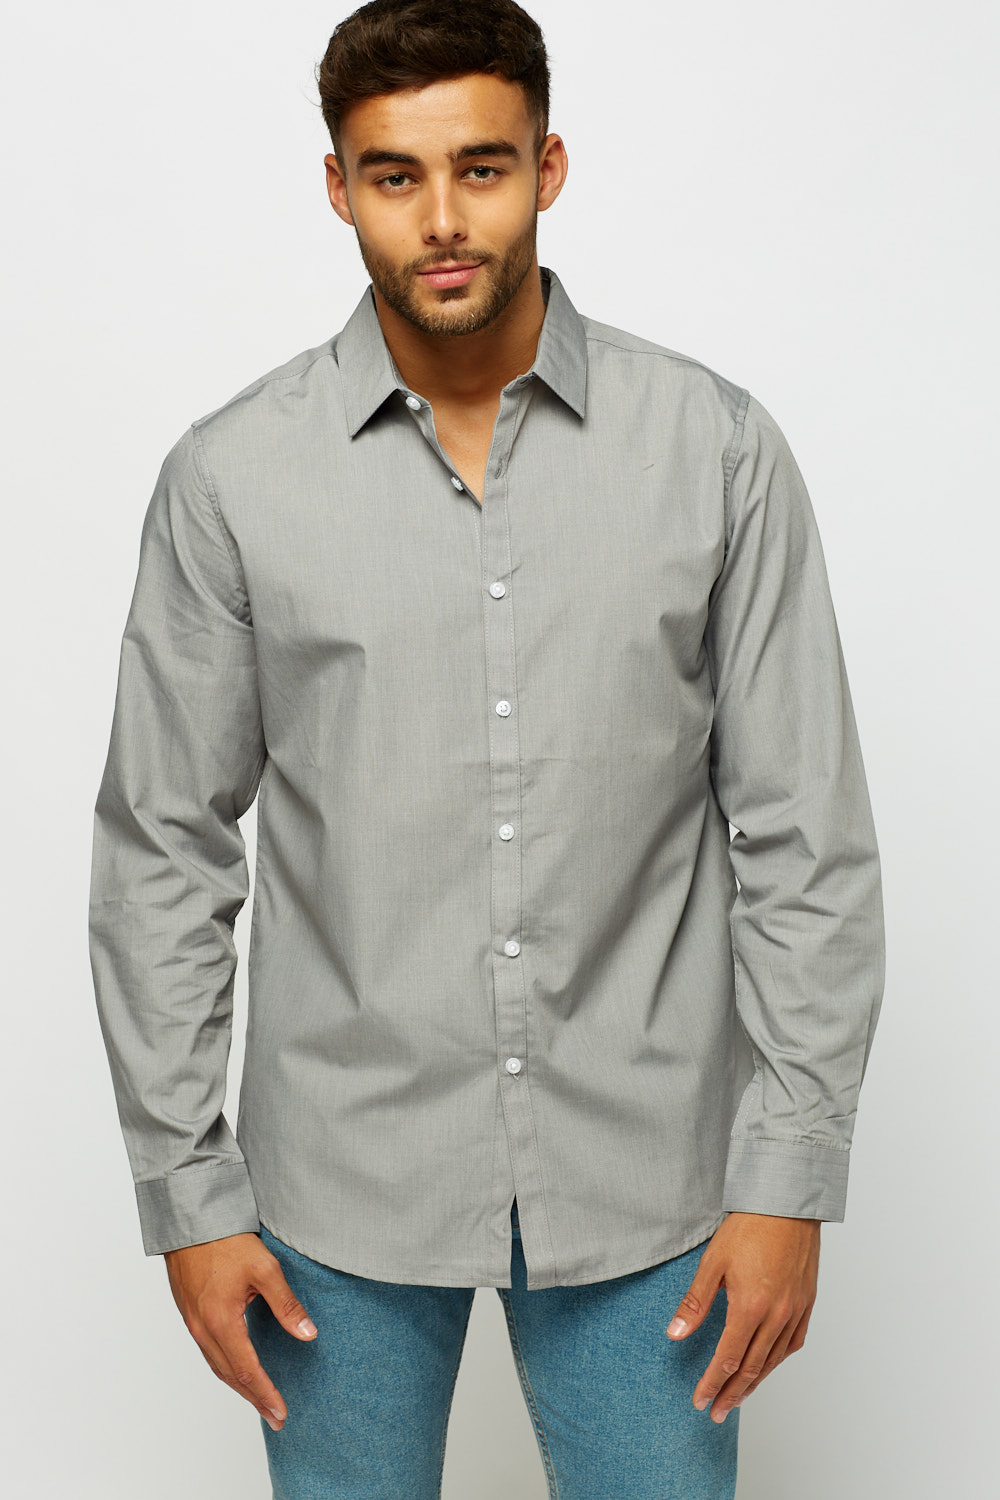 Grey Formal Shirt - Just $7